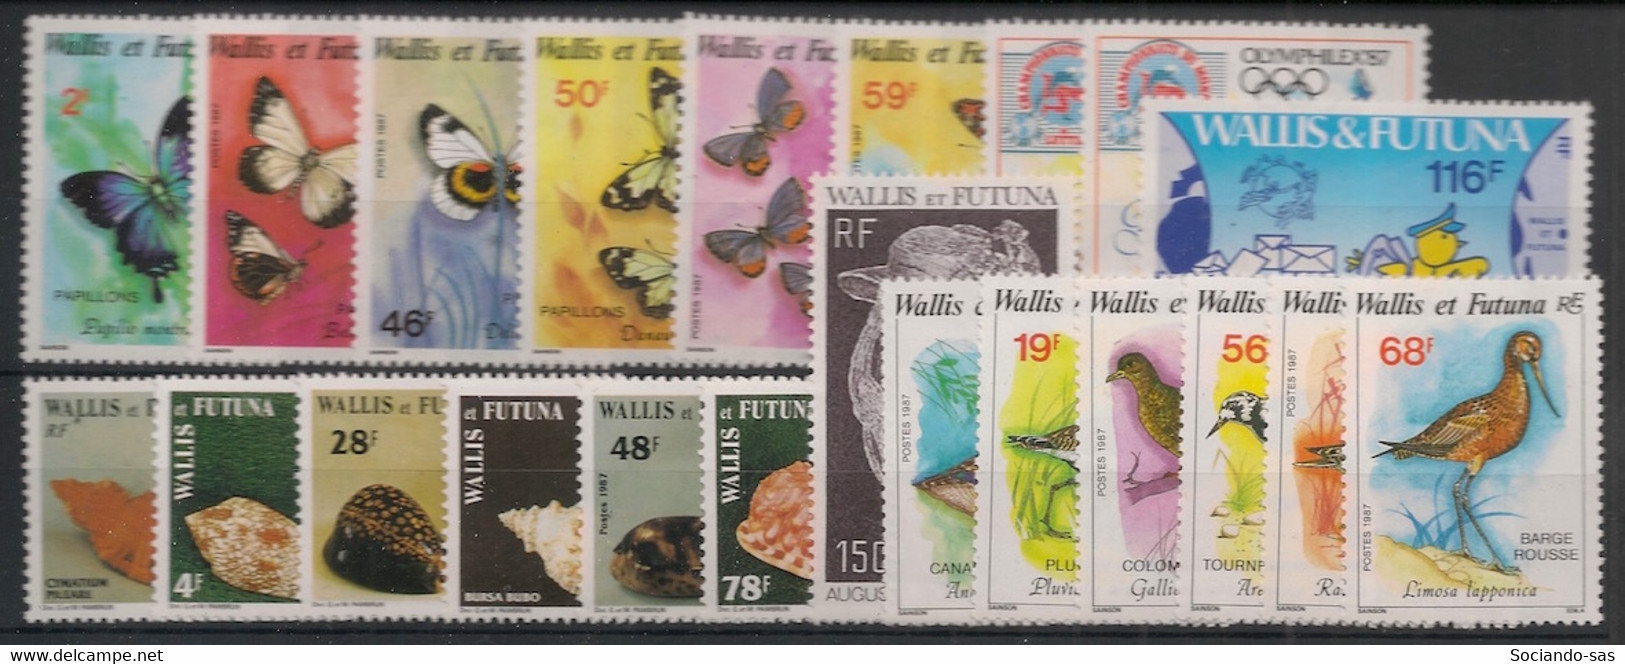 WALLIS ET FUTUNA - Année Complète 1987 - N°YT. 353 à 374 - 22 Valeurs  - Neuf Luxe ** / MNH / Postfrisch - Unused Stamps